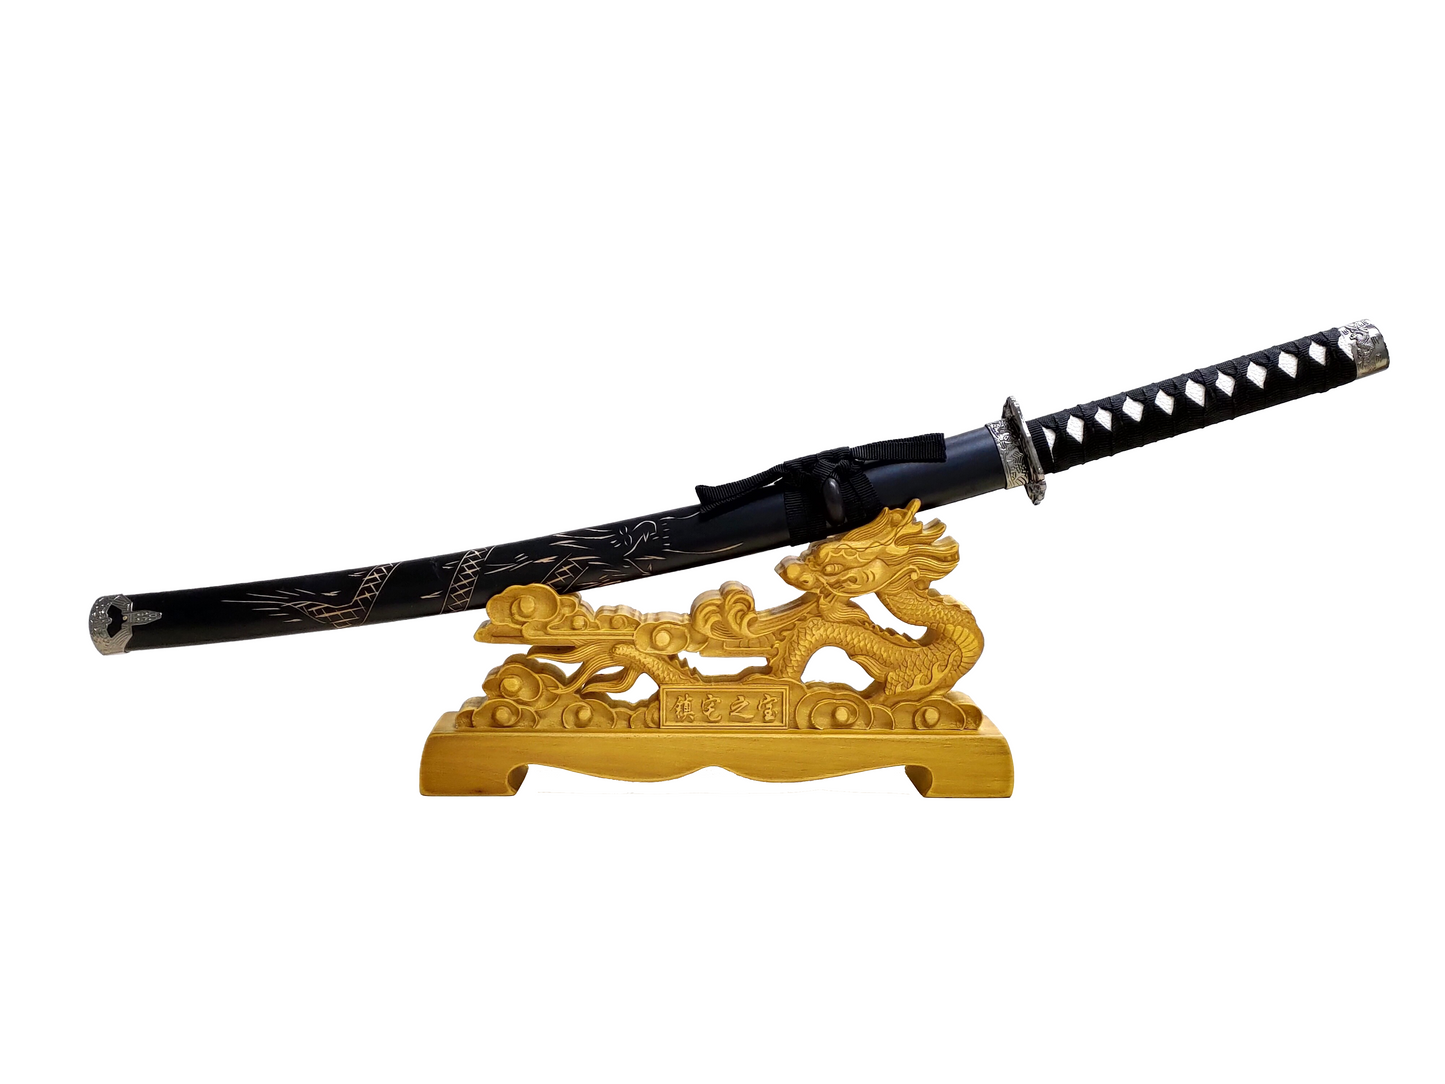 GOLDEN TREASURED DRAGON PREMIUM SINGLE SWORD DISPLAY STAND FOR SAMURAI & KATANA SWORDS